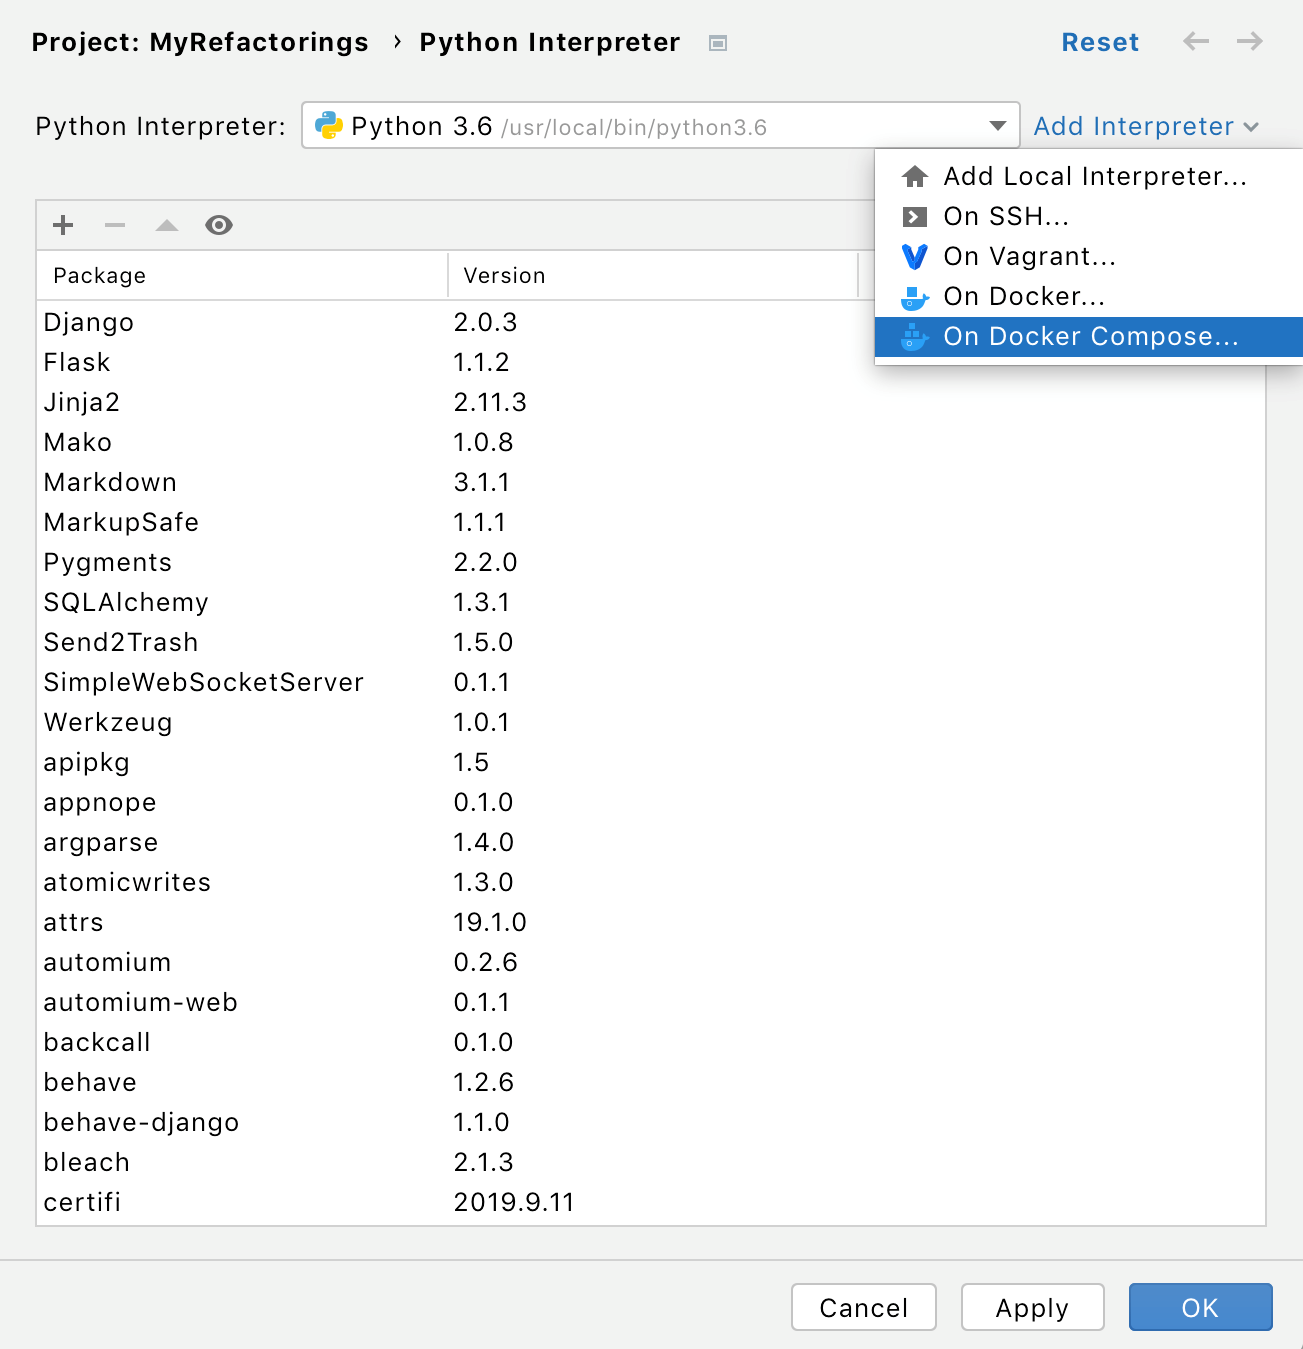 Adding Docker Compose-based interpreters